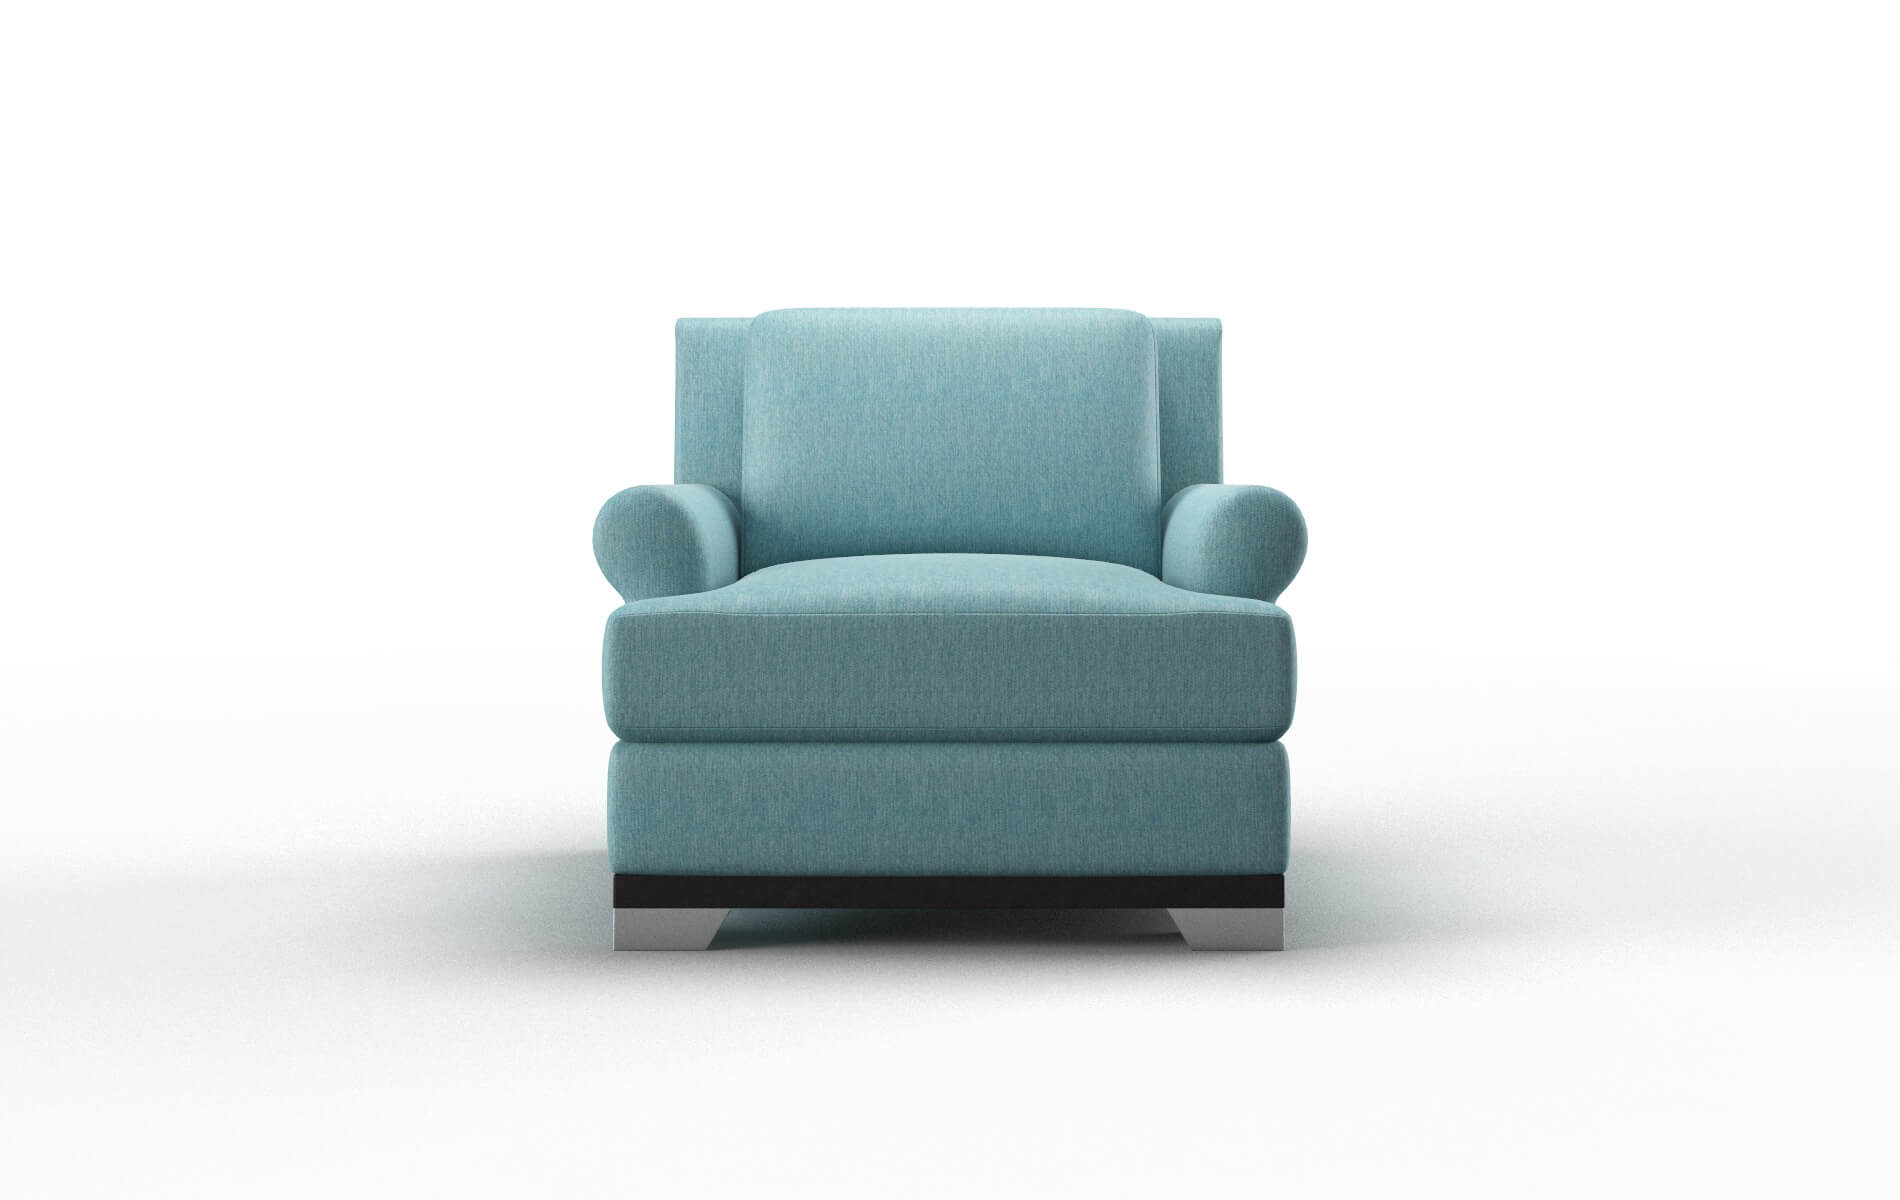 Newyork Cosmo Turquoise chair espresso legs